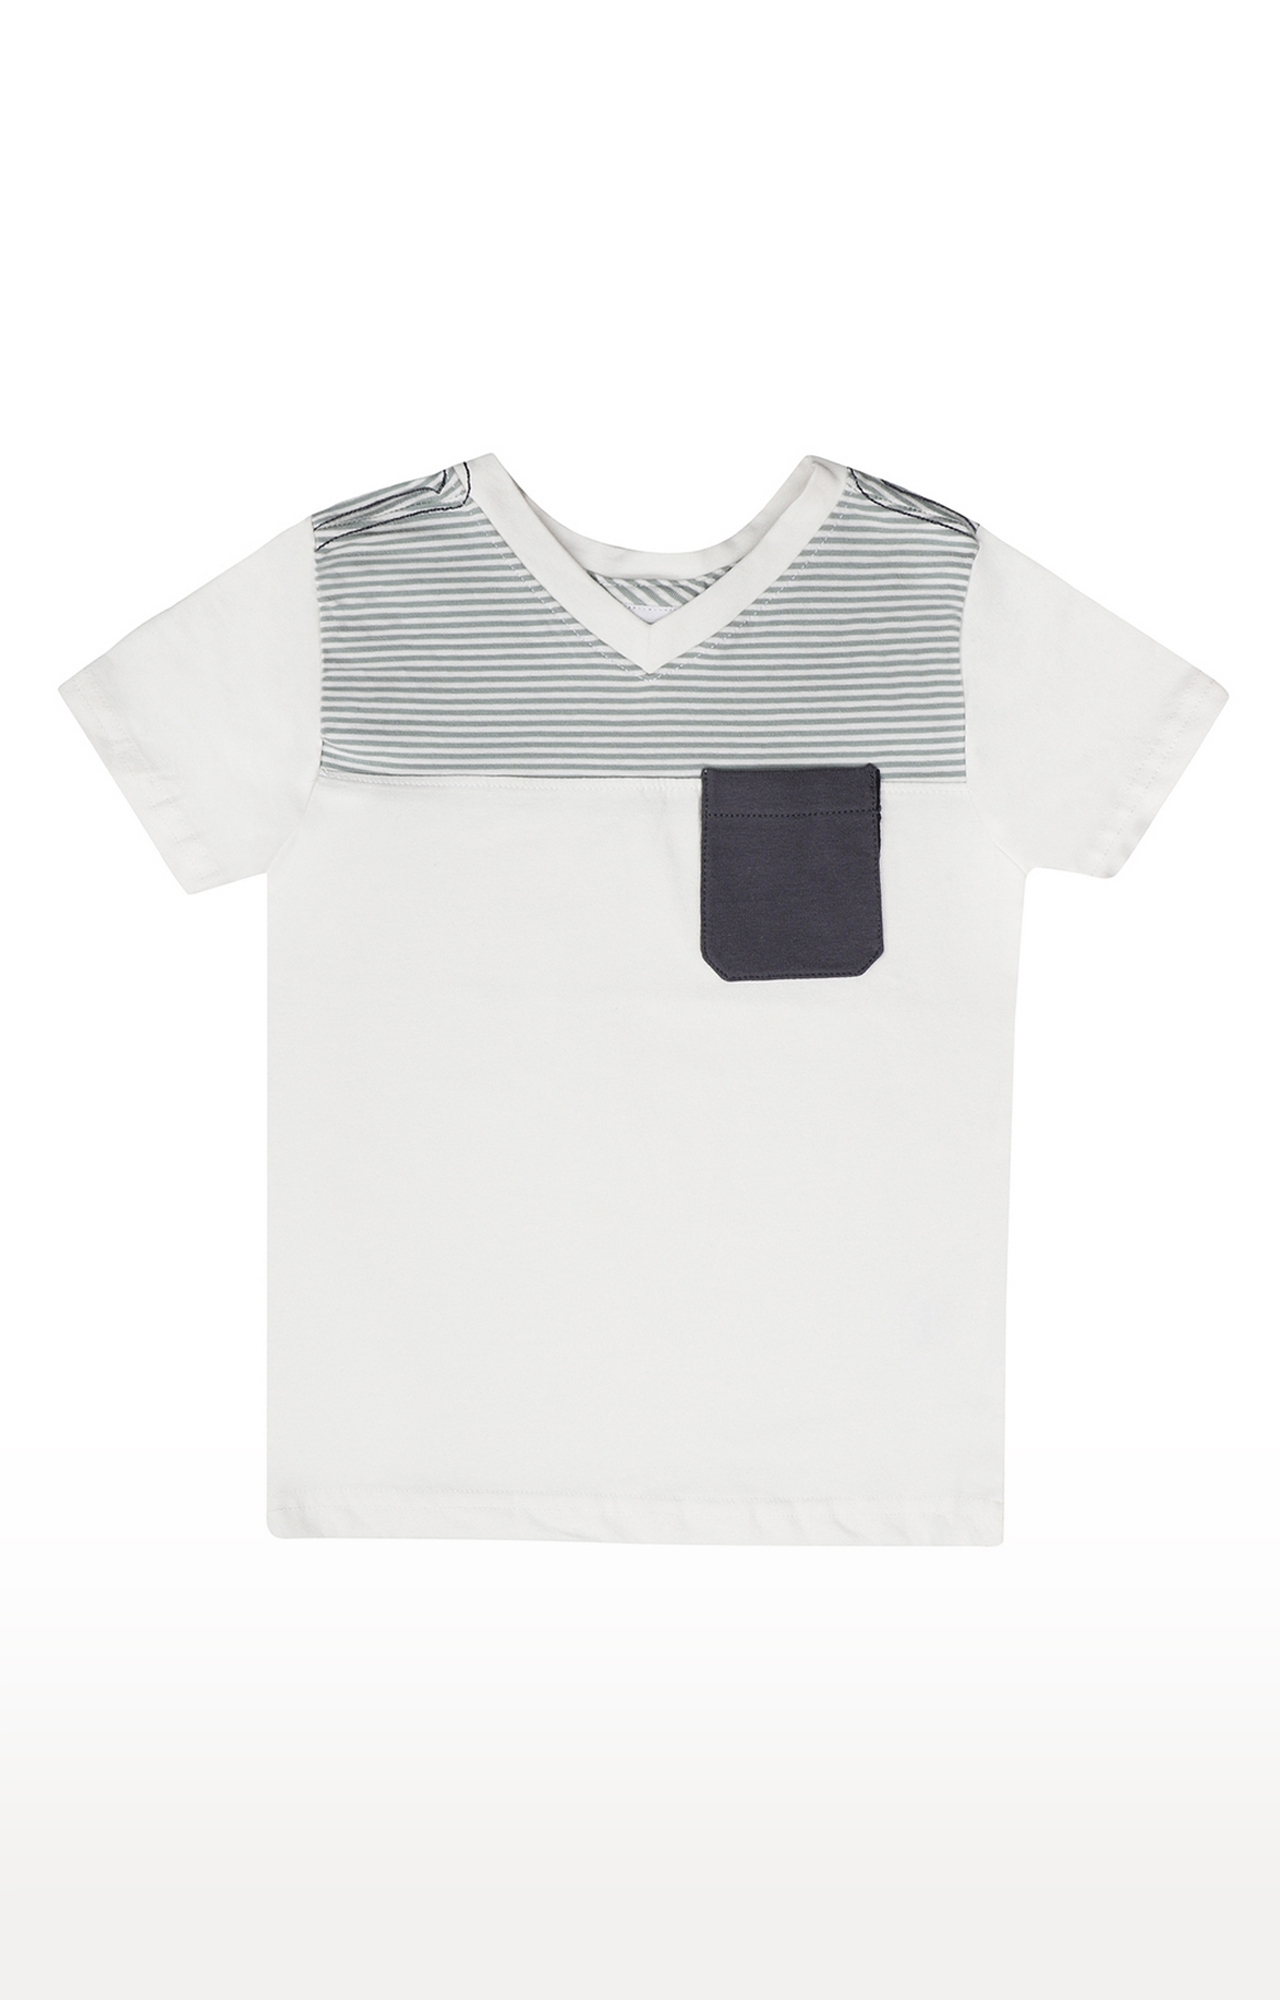 Popsicles Clothing | Popsicles Soft Cotton Comfort fit V-Neck Short Sleeves Boys T-Shirt - Off White (0-6M)